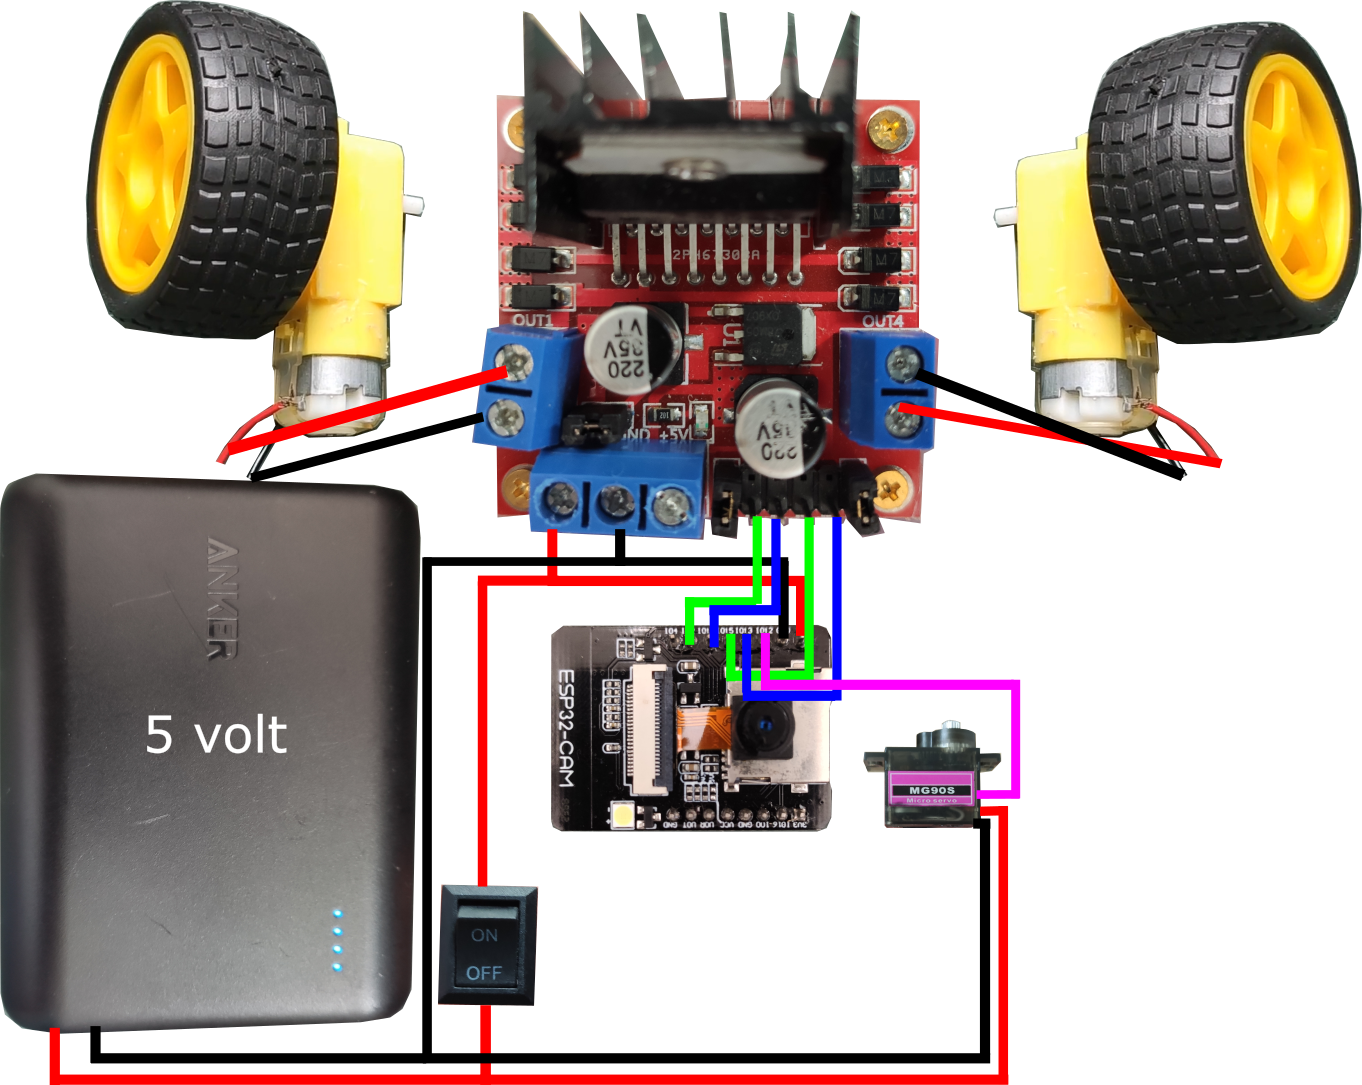 Build an ESP32CAM Robot Car